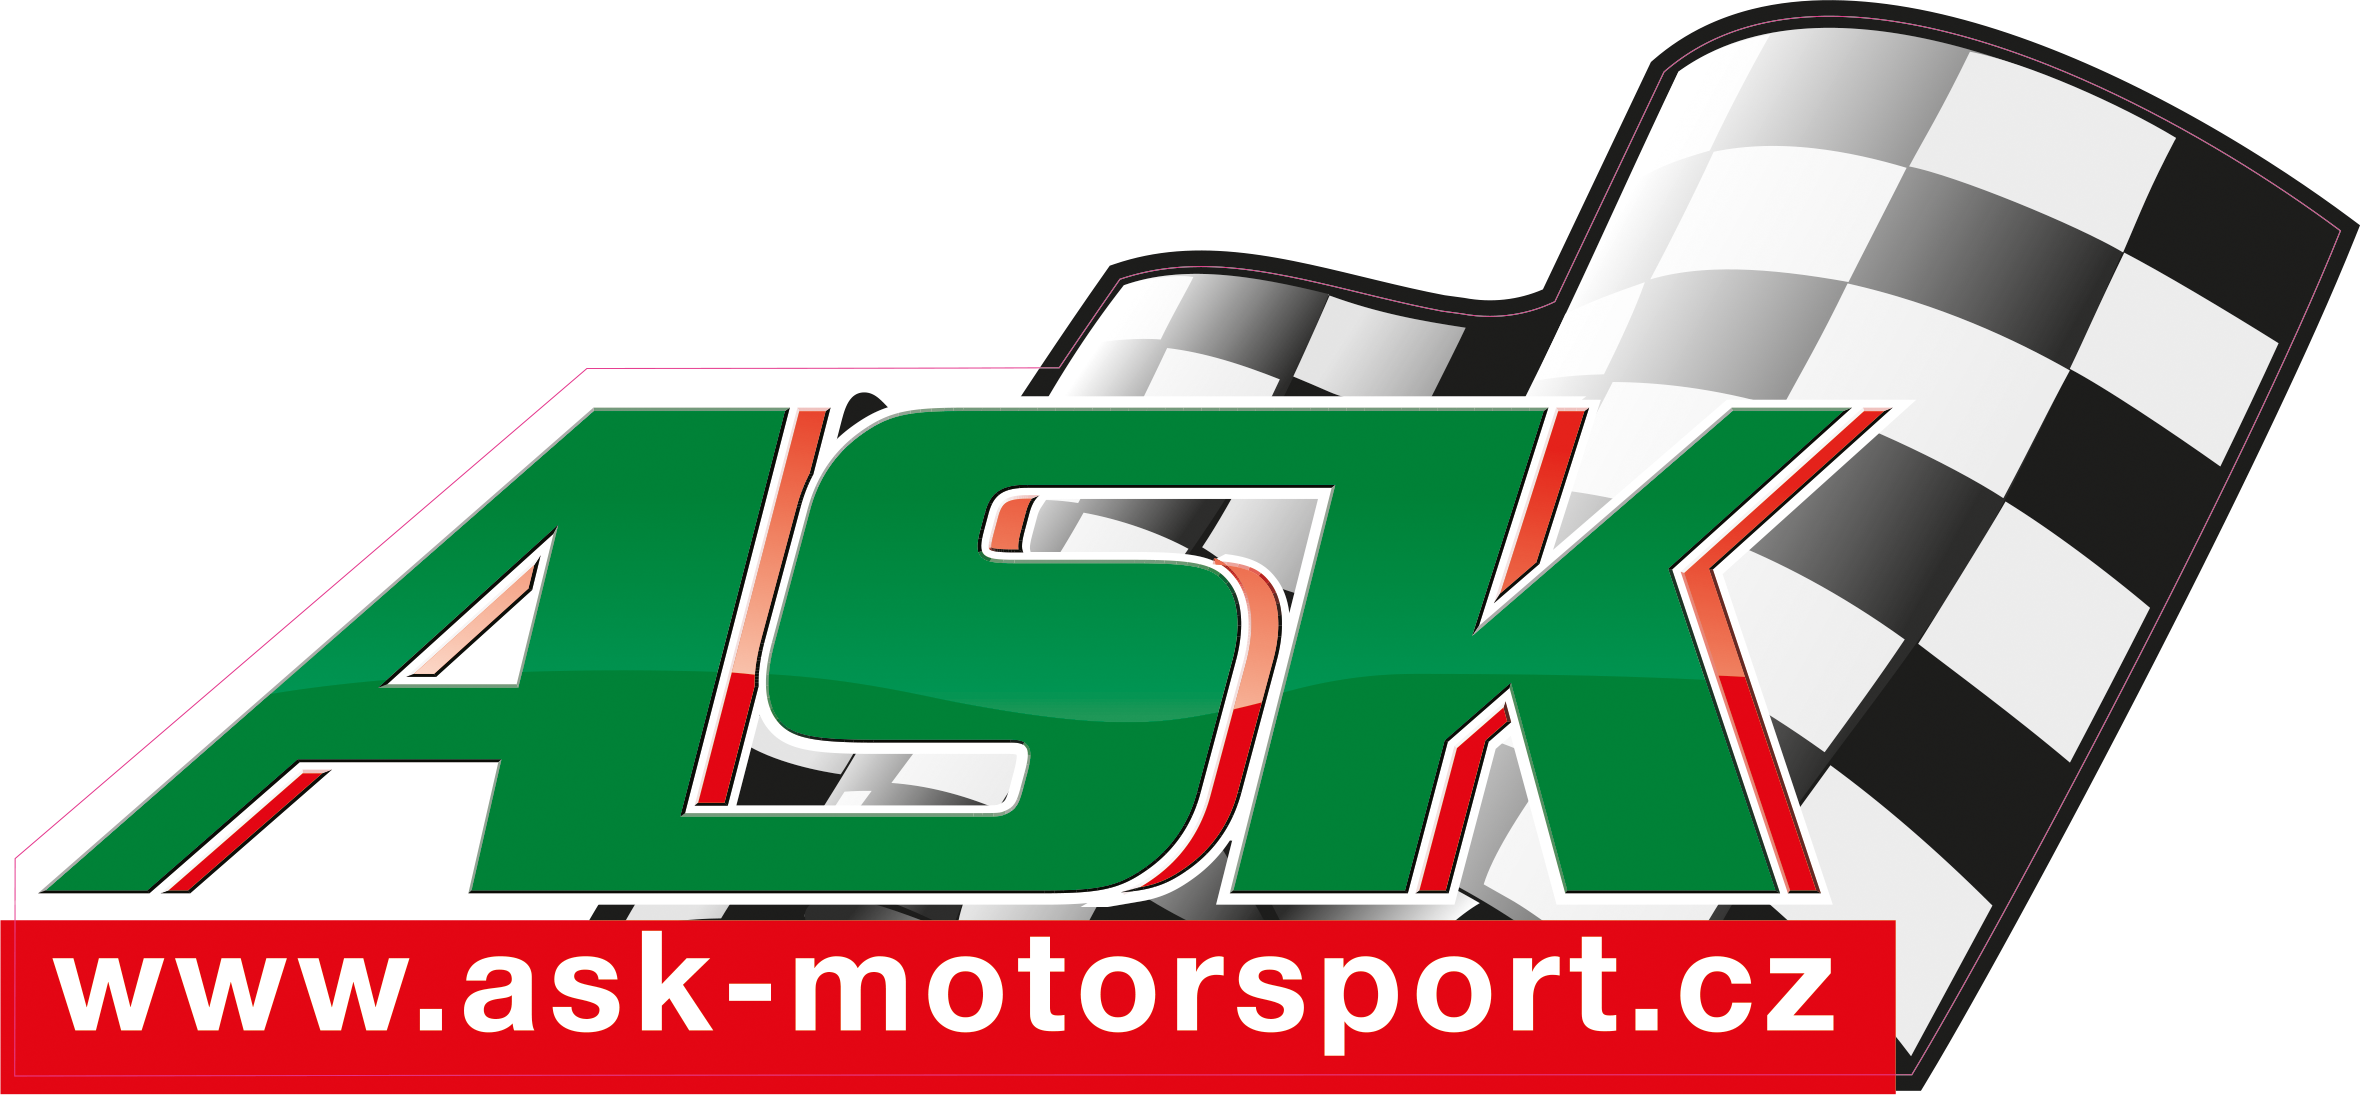 ASK - Motorsport